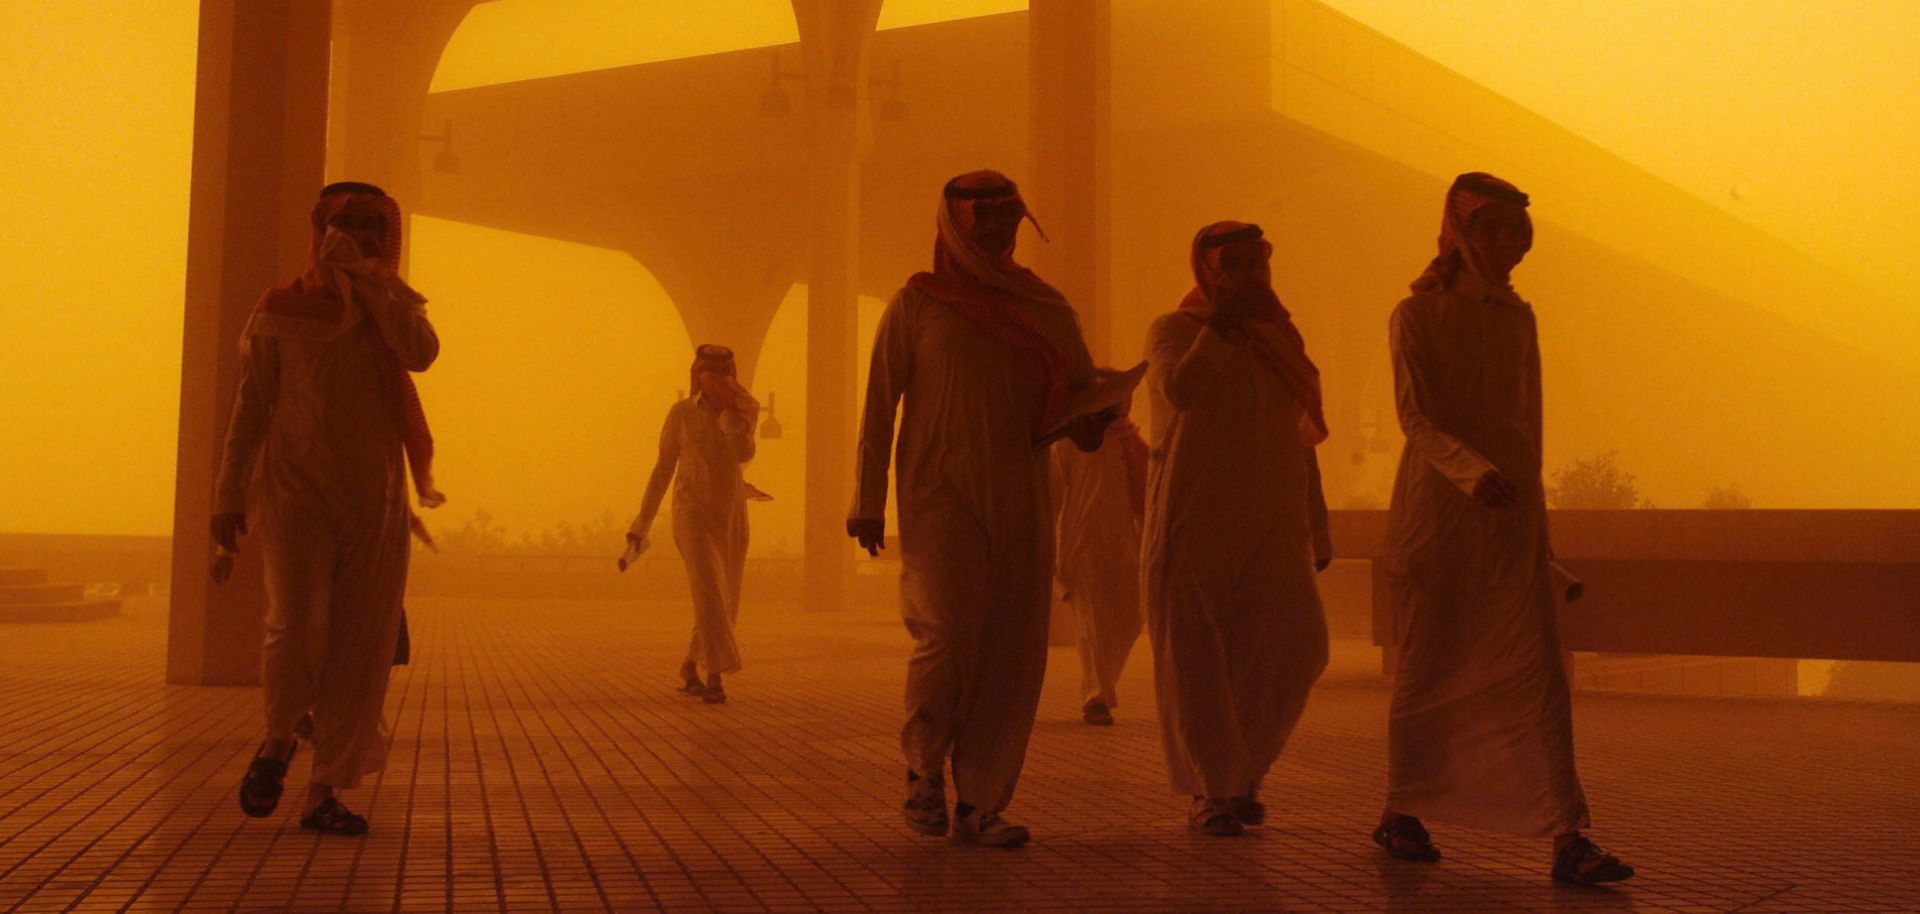 Saudi citizens struggle to see the horizon through a punishing sandstorm.